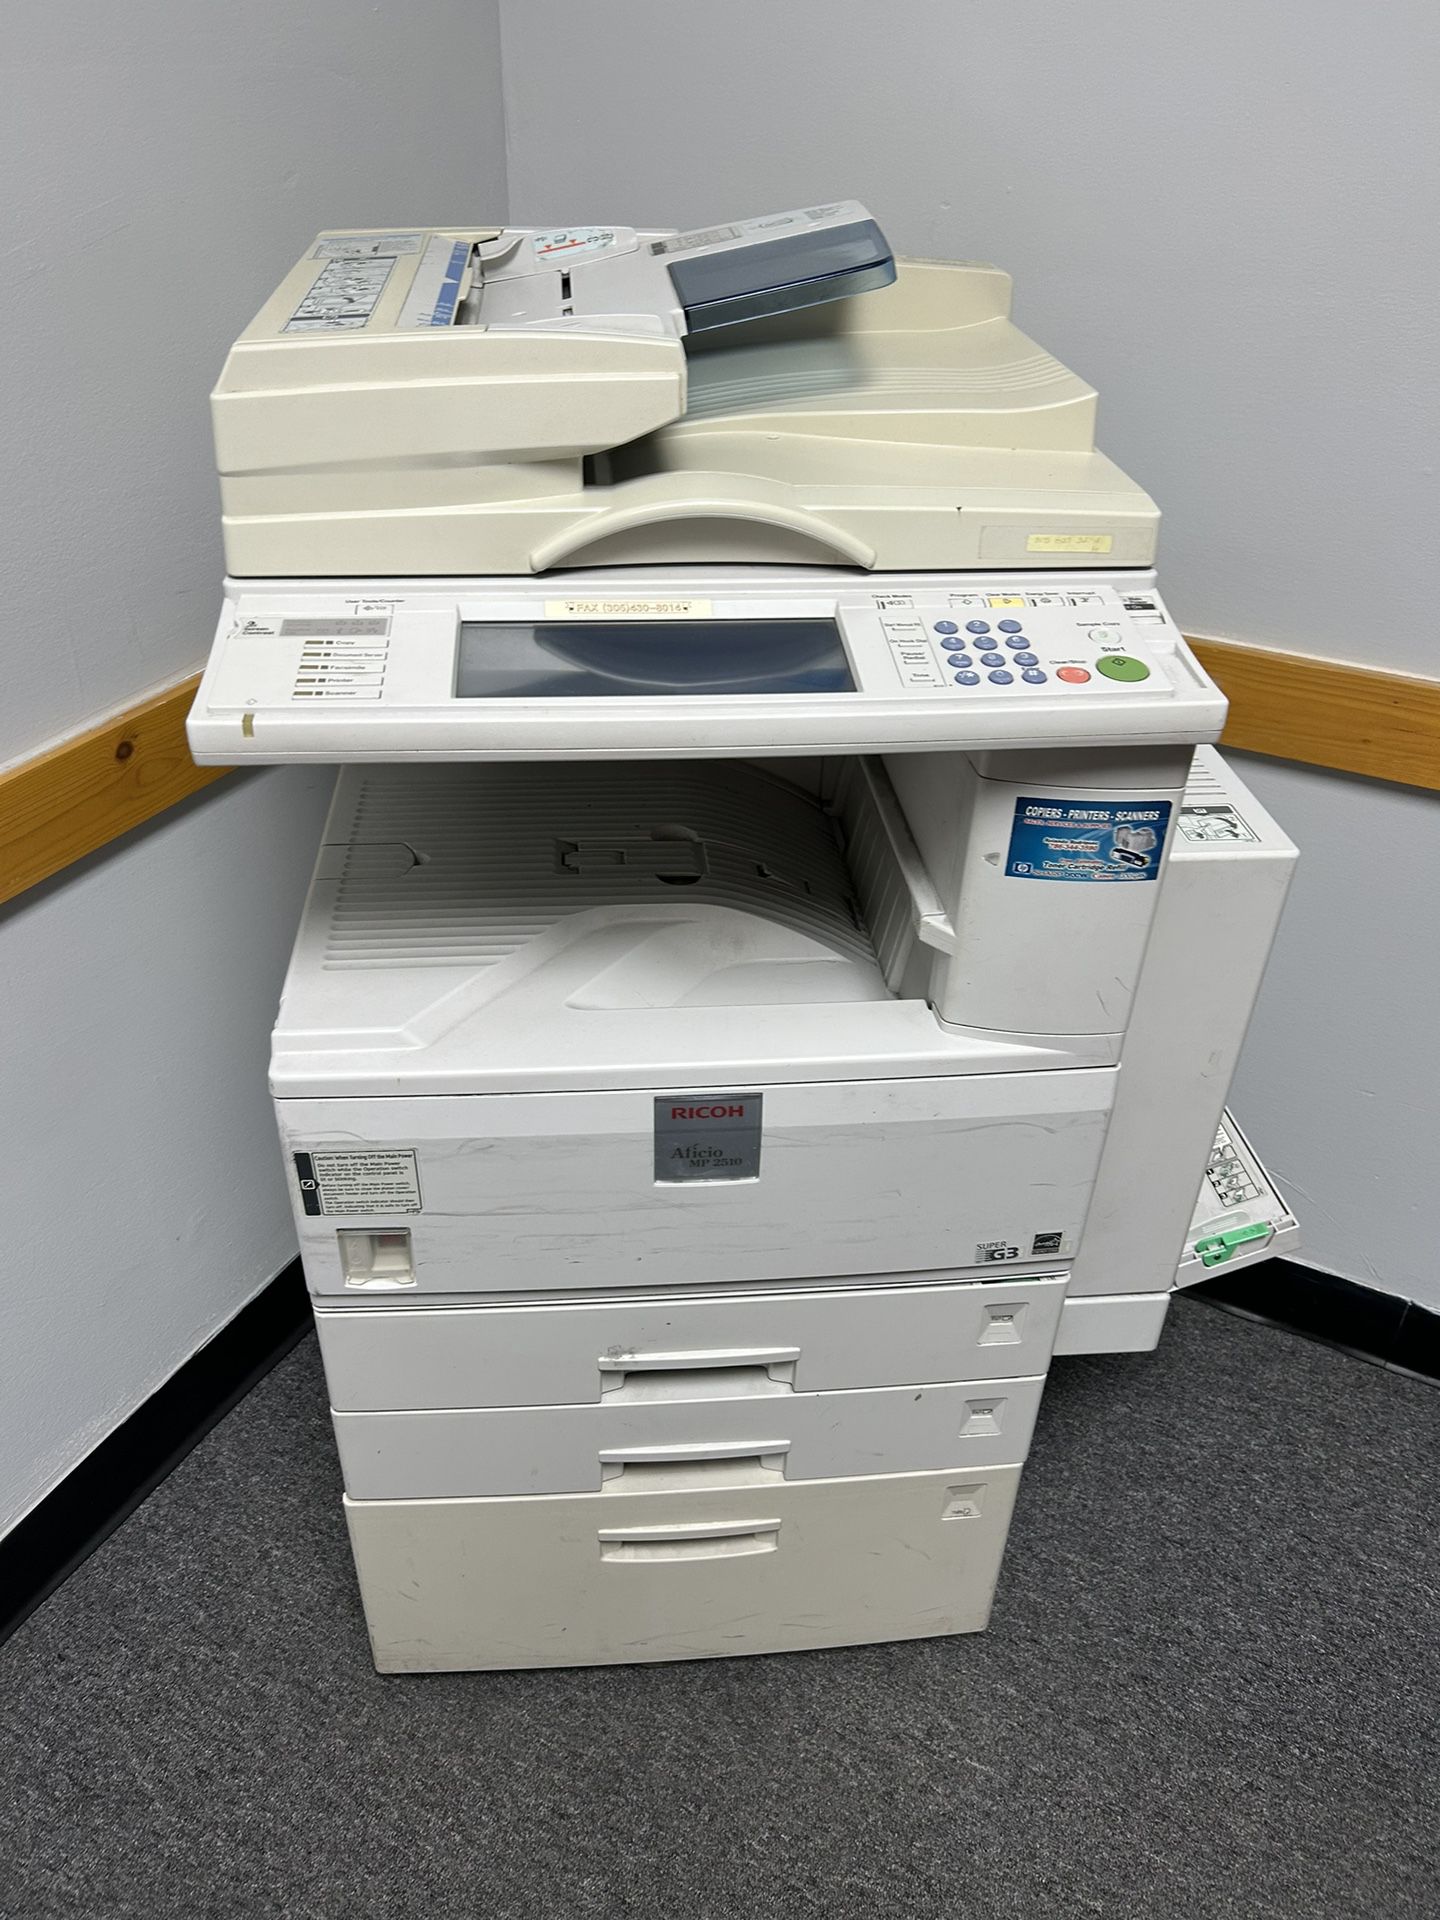 Printer And Fax Machine 